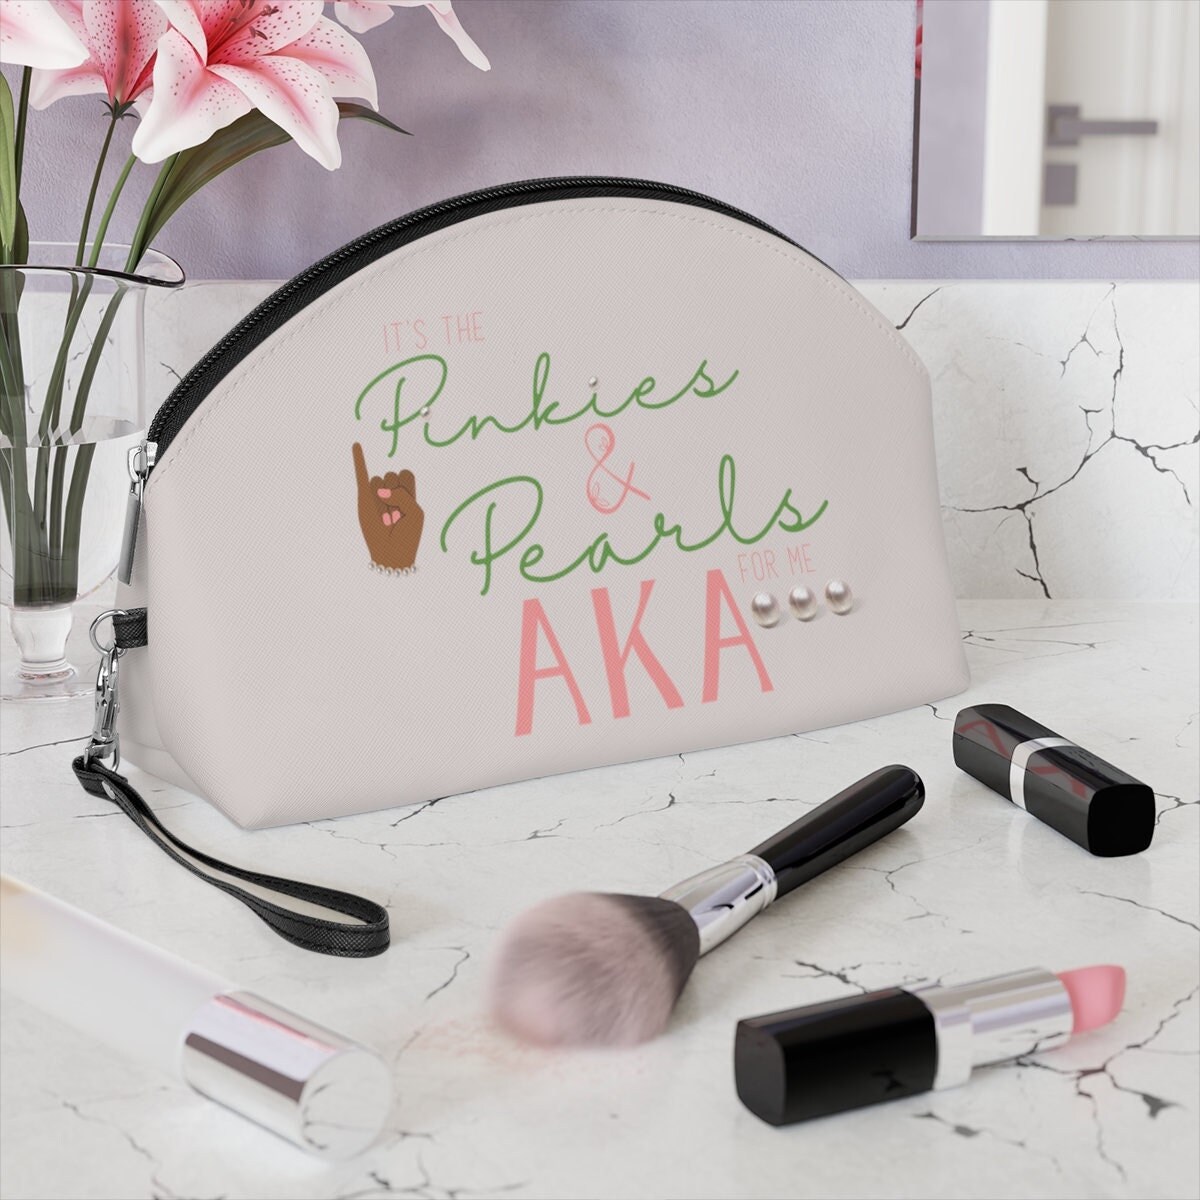 Light Pink Iridescent Make-Up Bag — Peak Academy of Dance